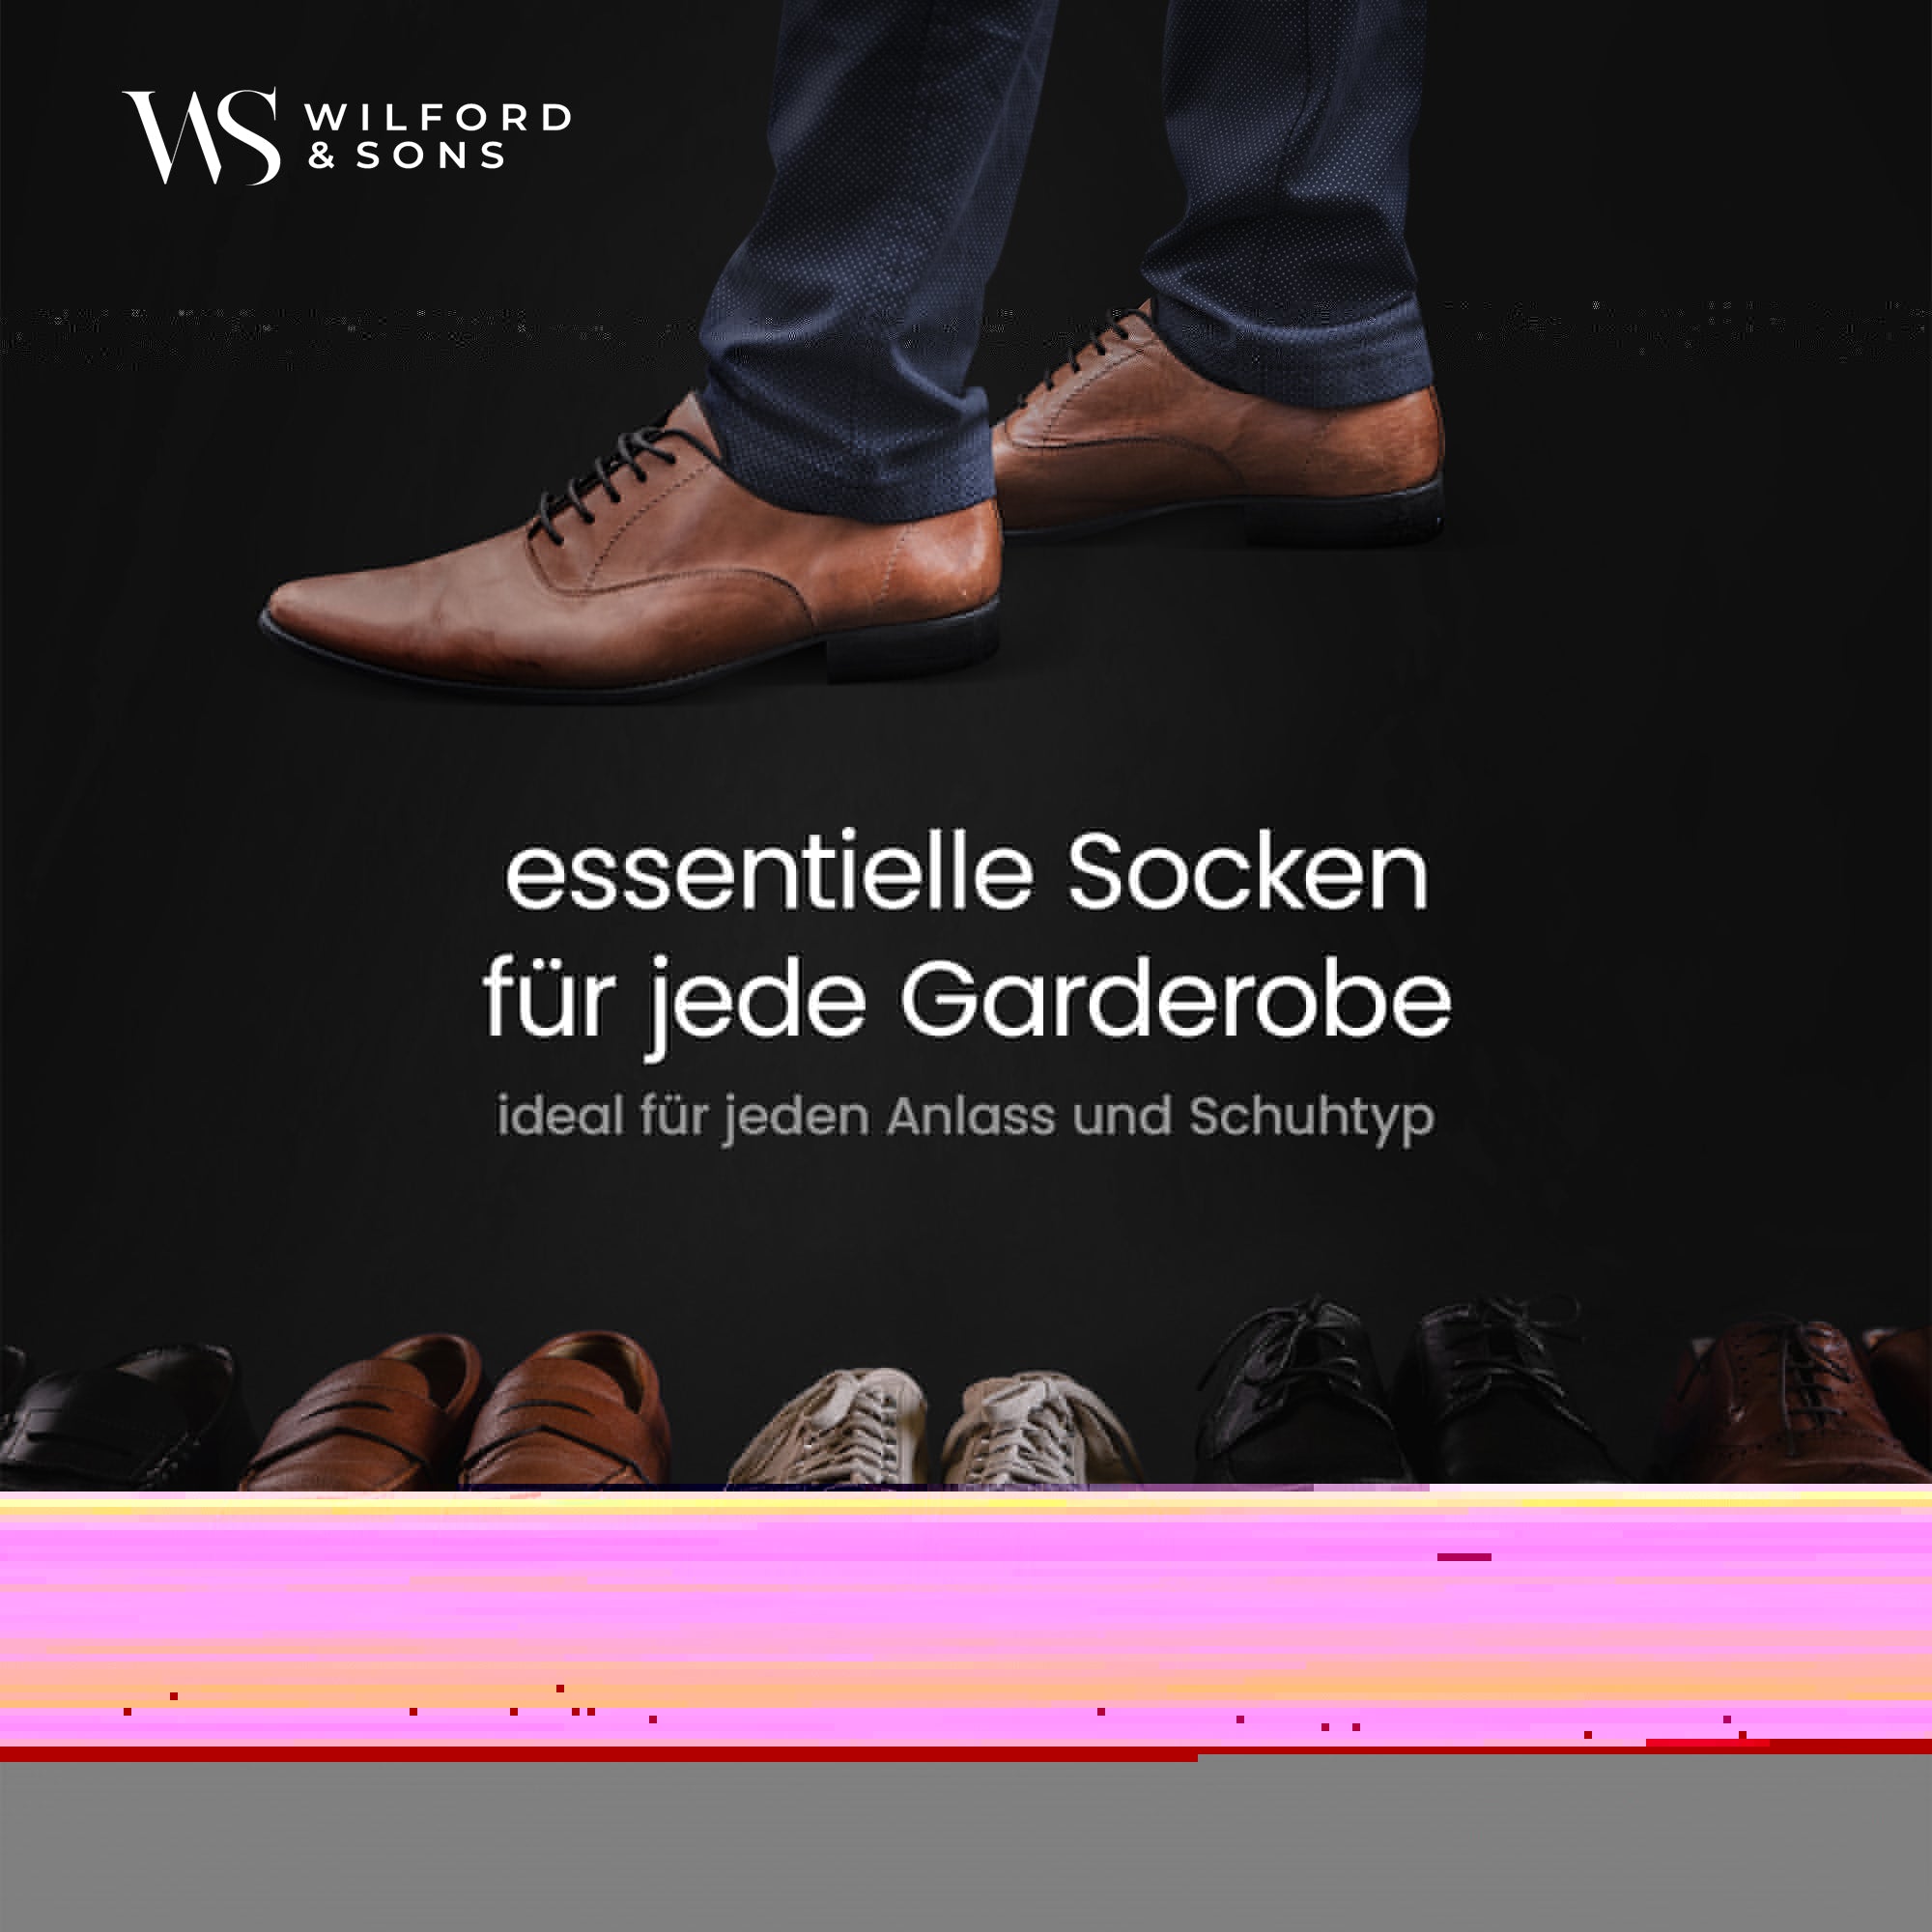 Business Socks Black | 10 pairs